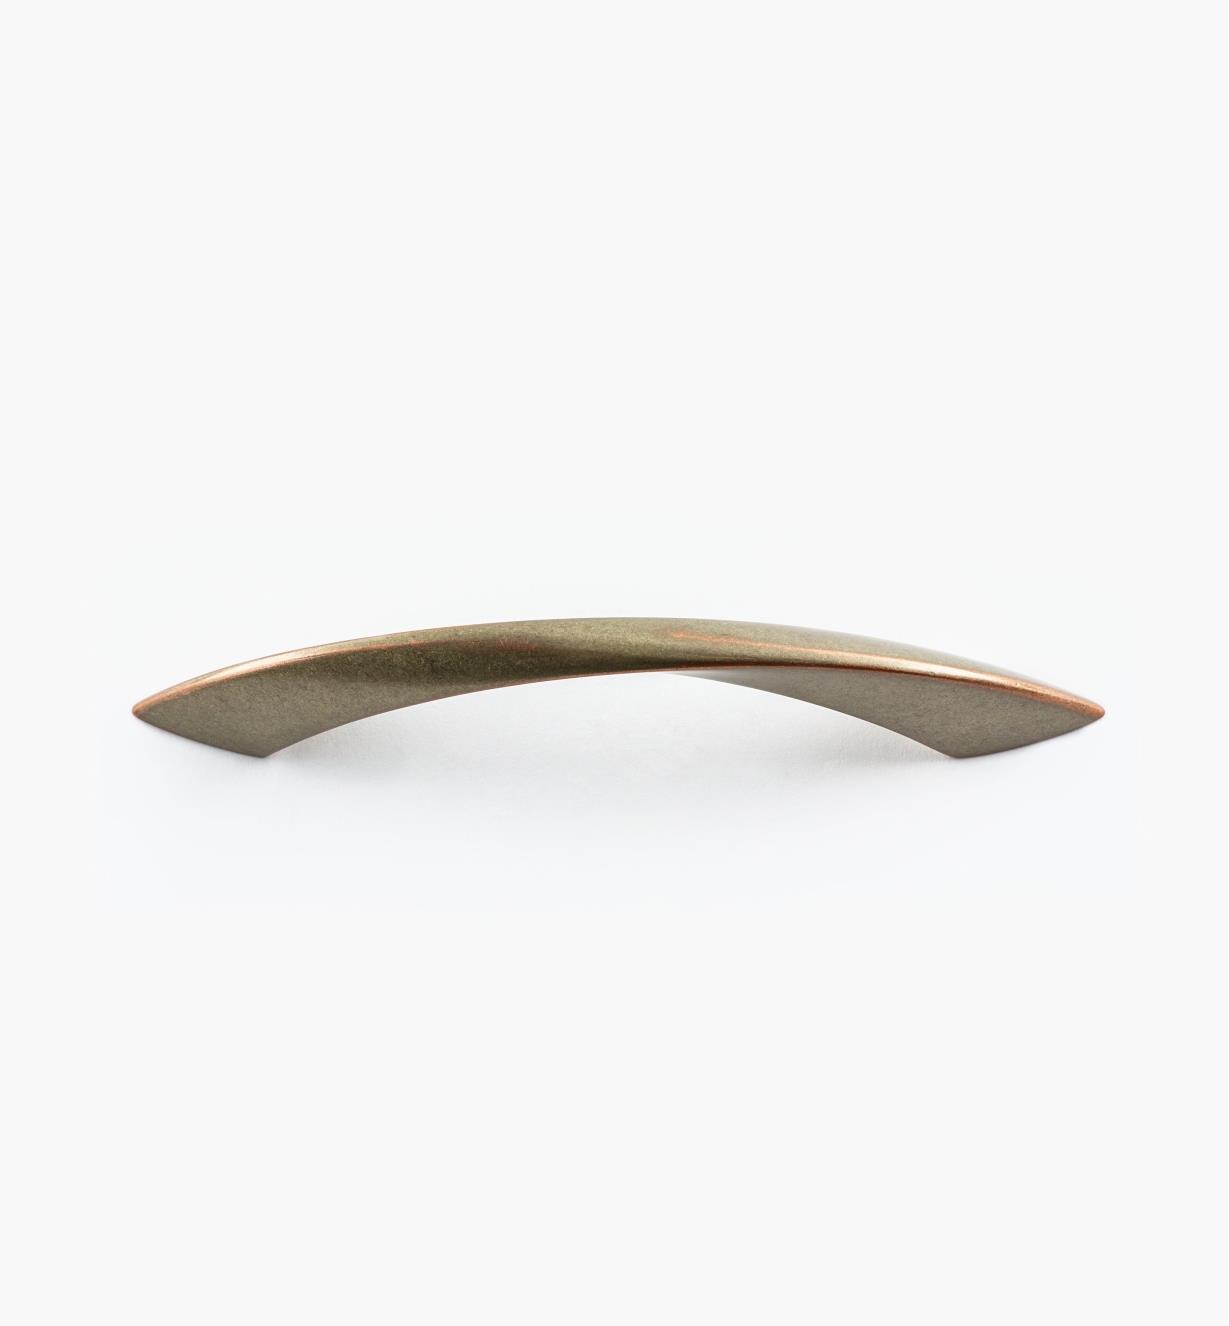 02A1322 - Poignée vrillée de 128 mm, série Galleria, fini nickel-cuivre vieilli